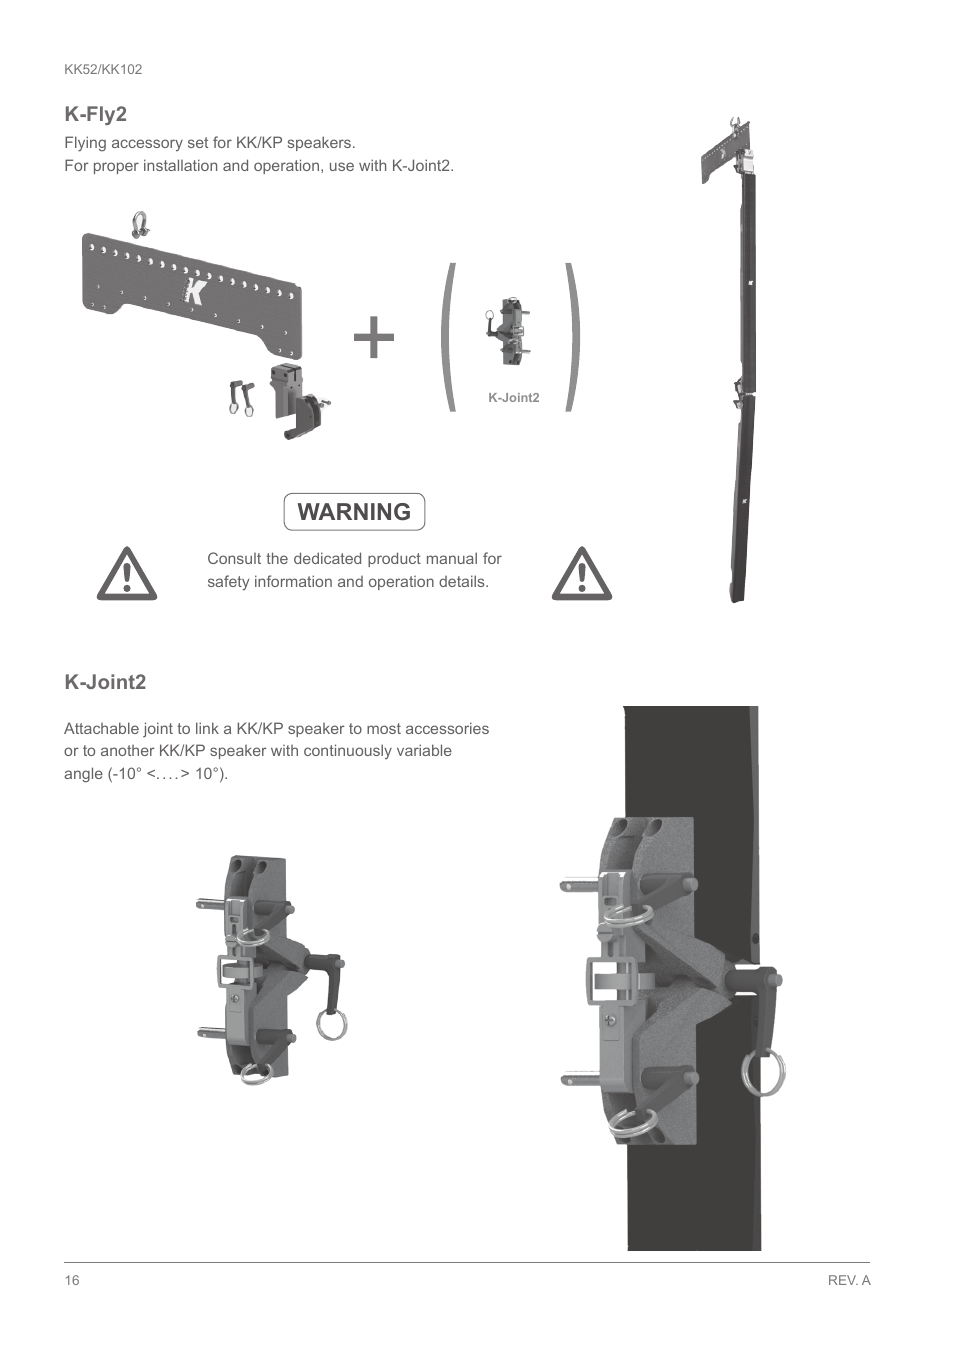 Warning, K-fly2, K-joint2 | K-array KK102 User Manual | Page 16 / 24